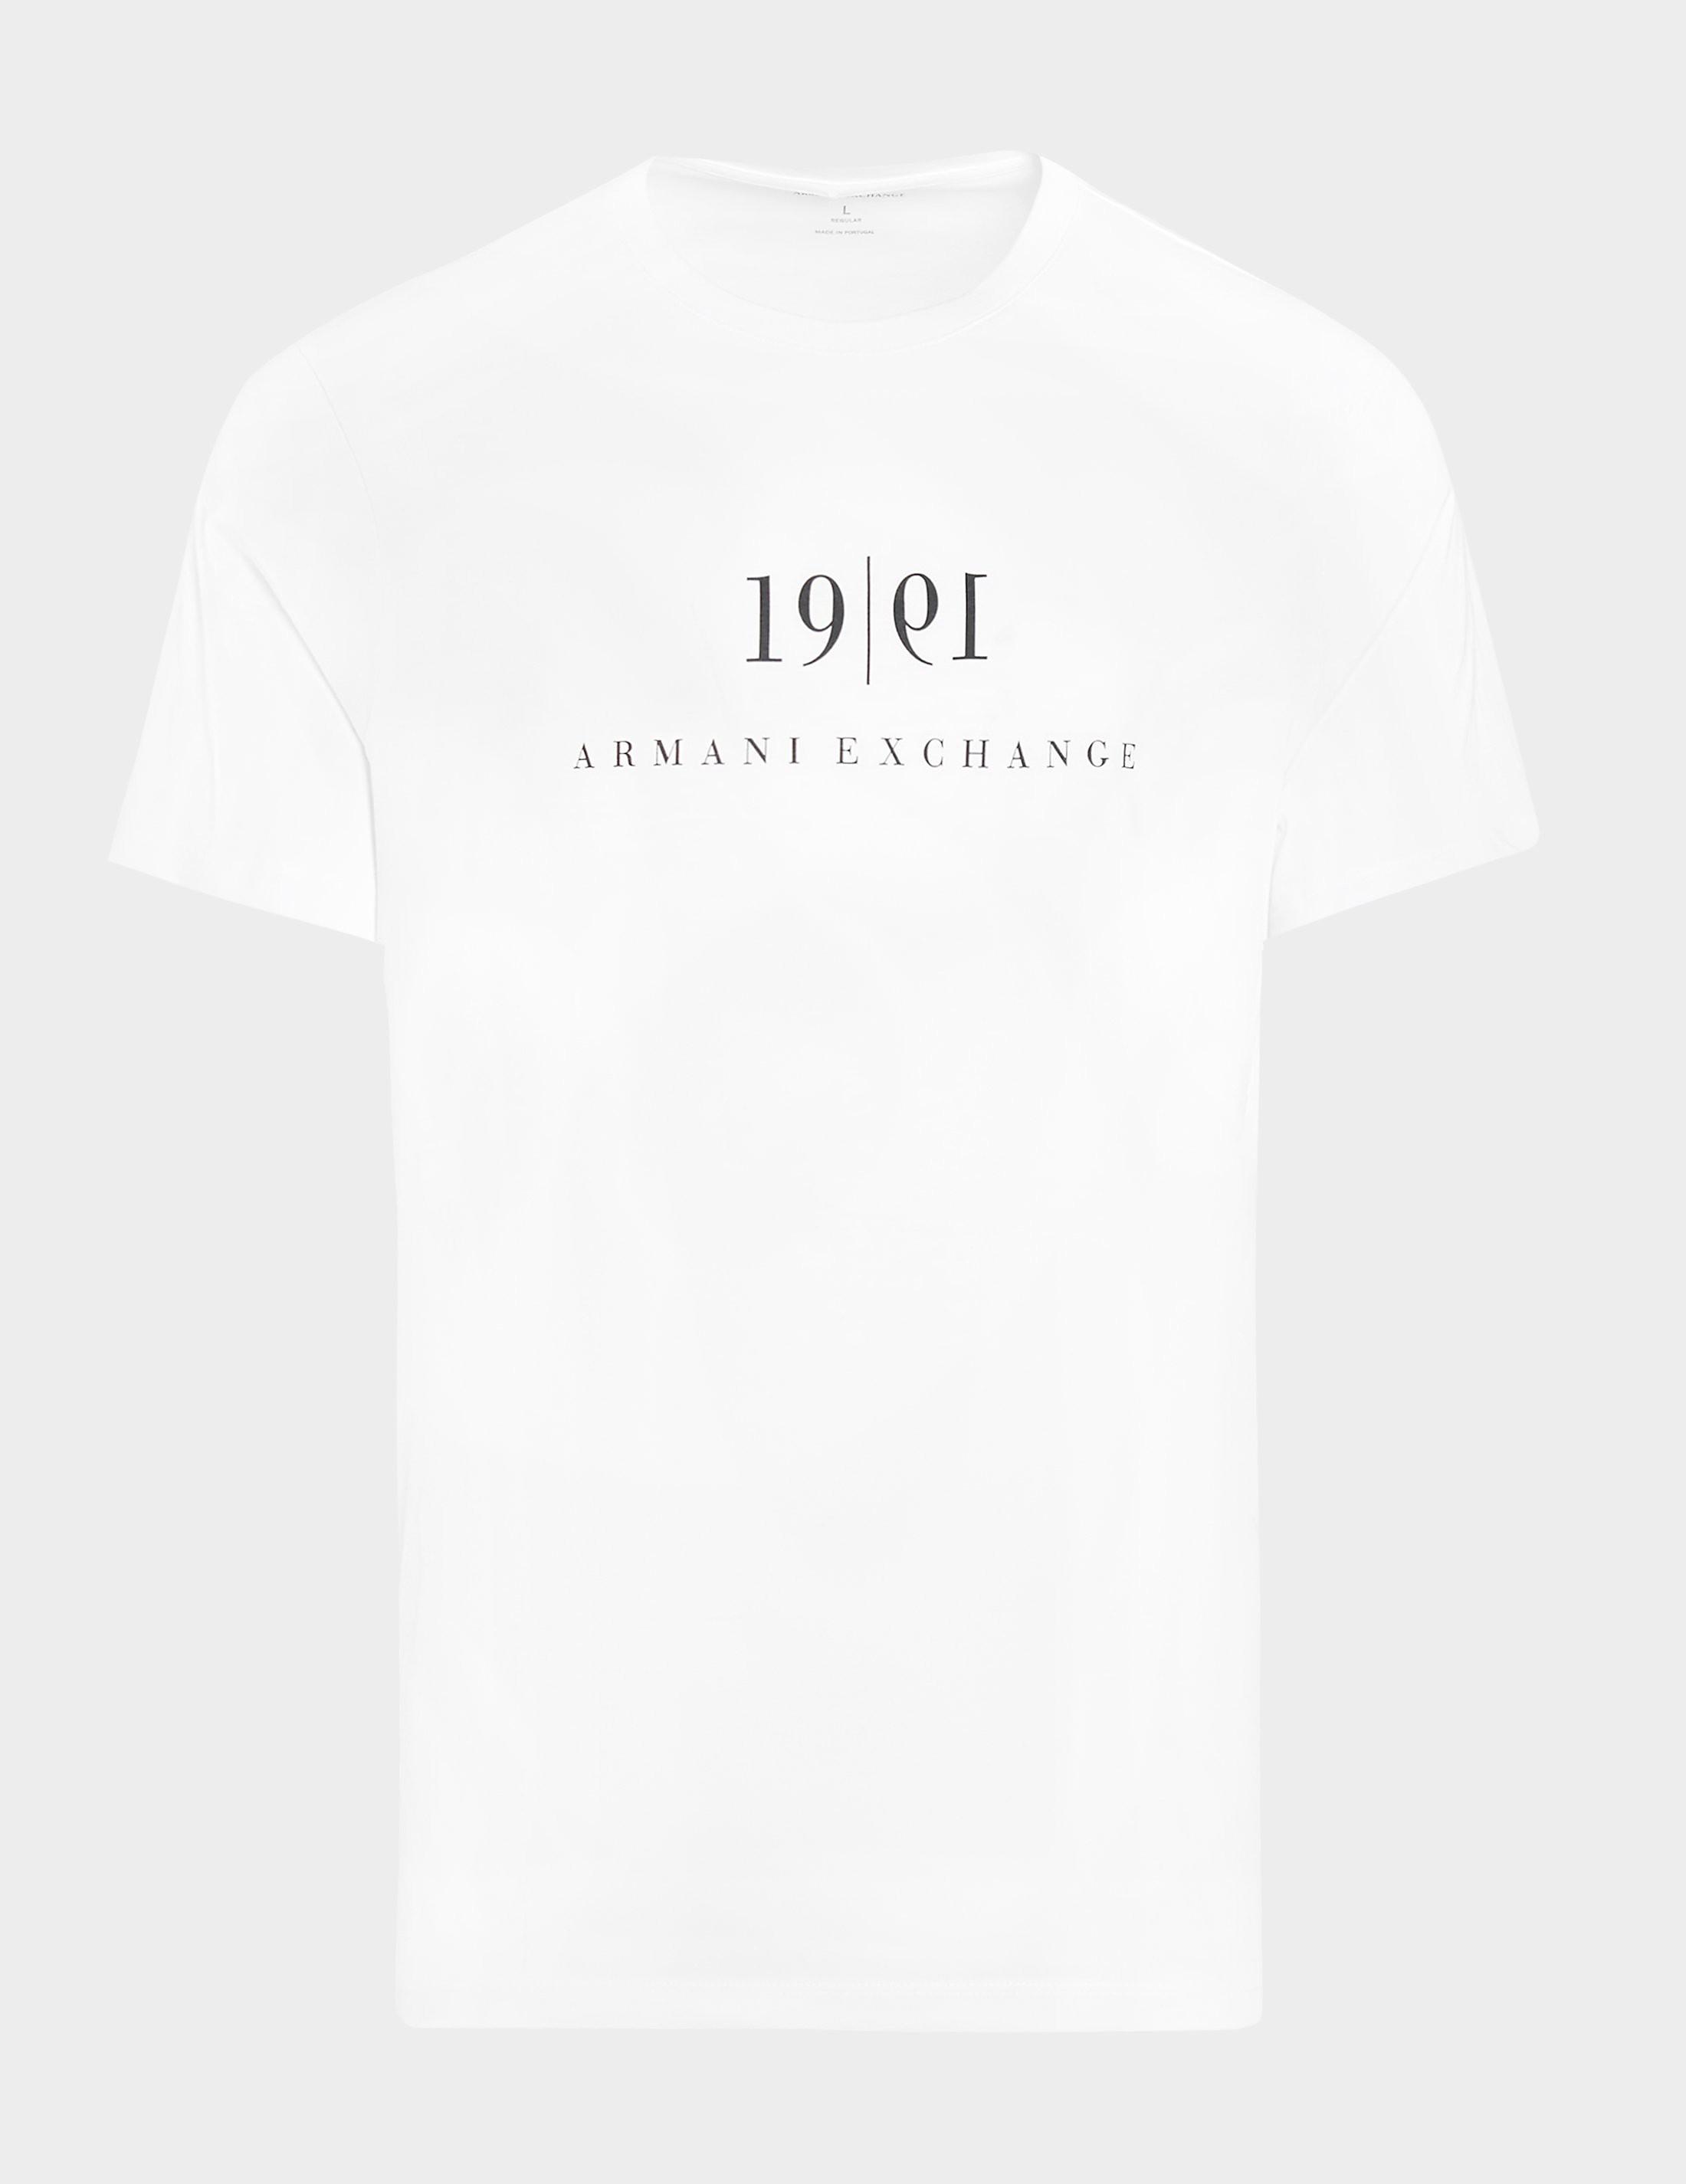 armani exchange 1991 t-shirt